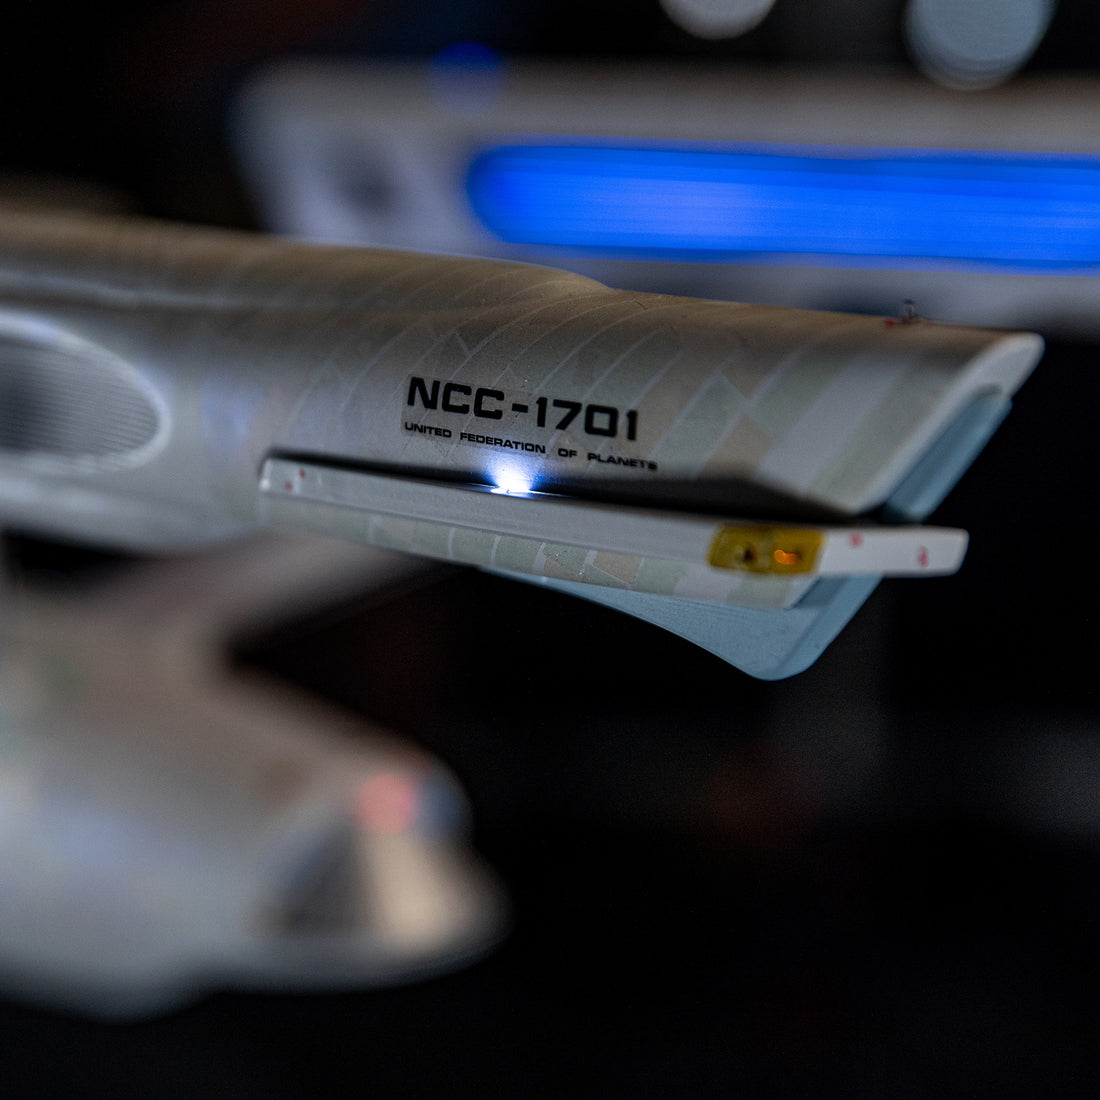 Star Trek | U.S.S. Enterprise NCC-1701 Star Trek: The Motion Picture Version